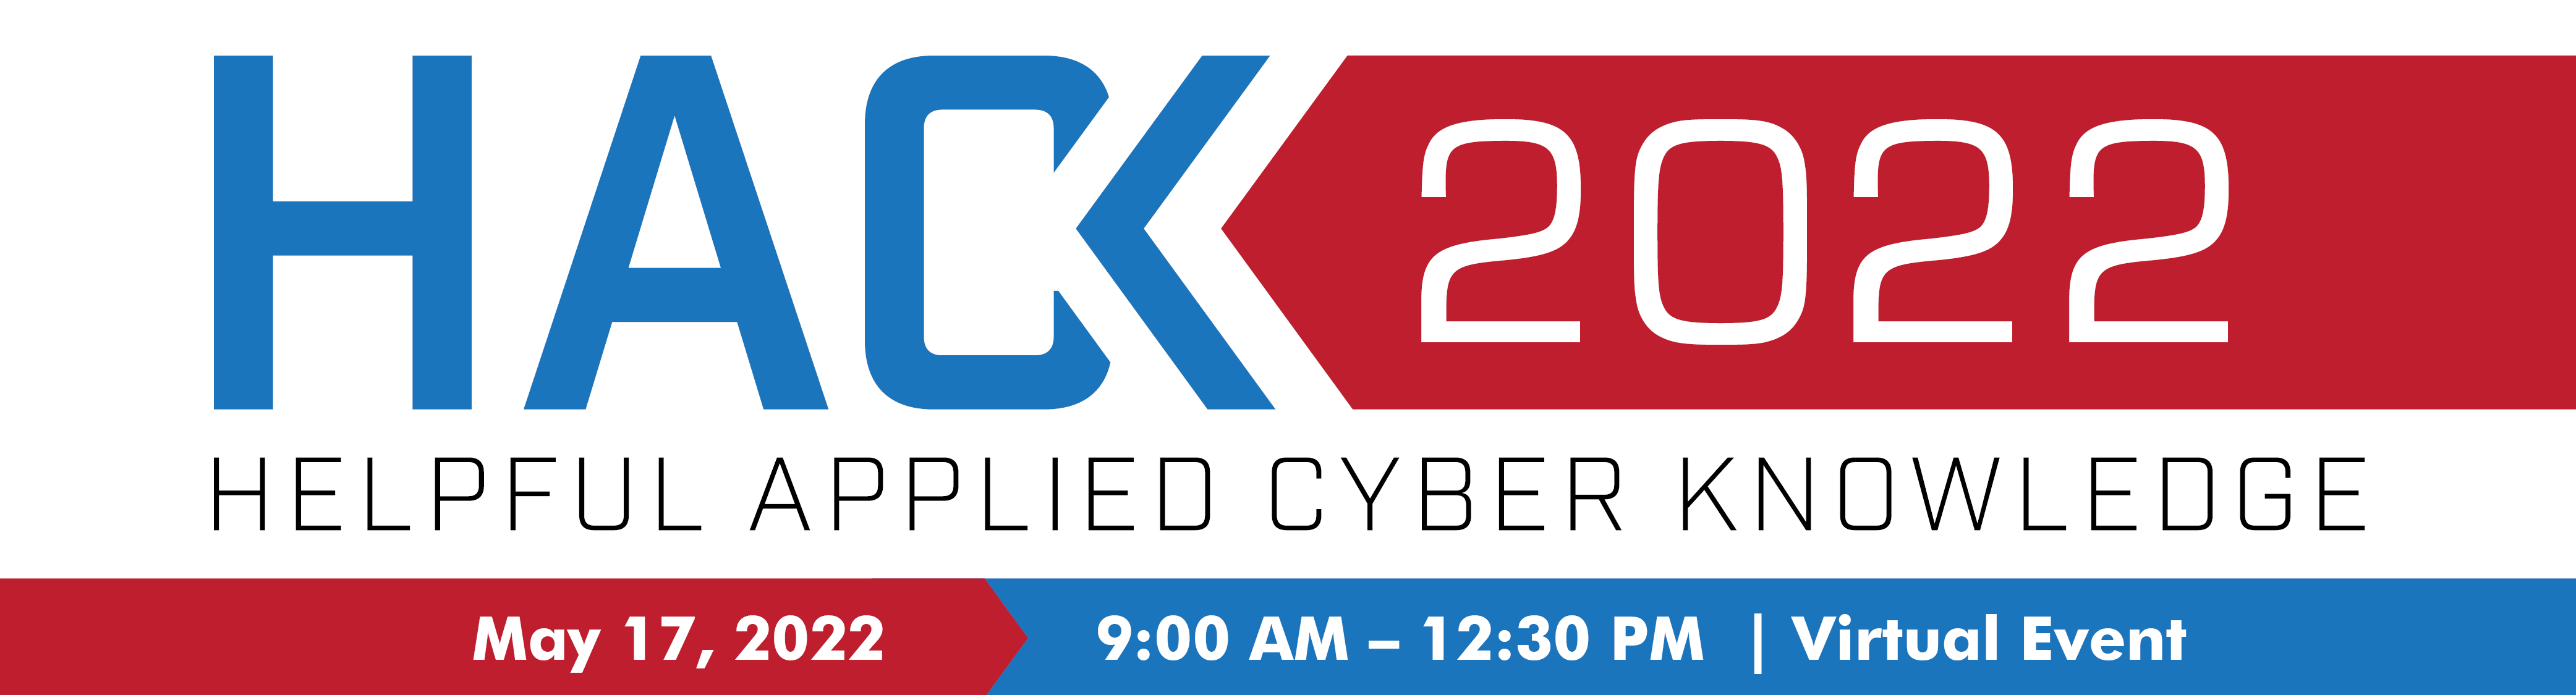 NRC HACK Cybersecurity Virtual Seminar & Expo